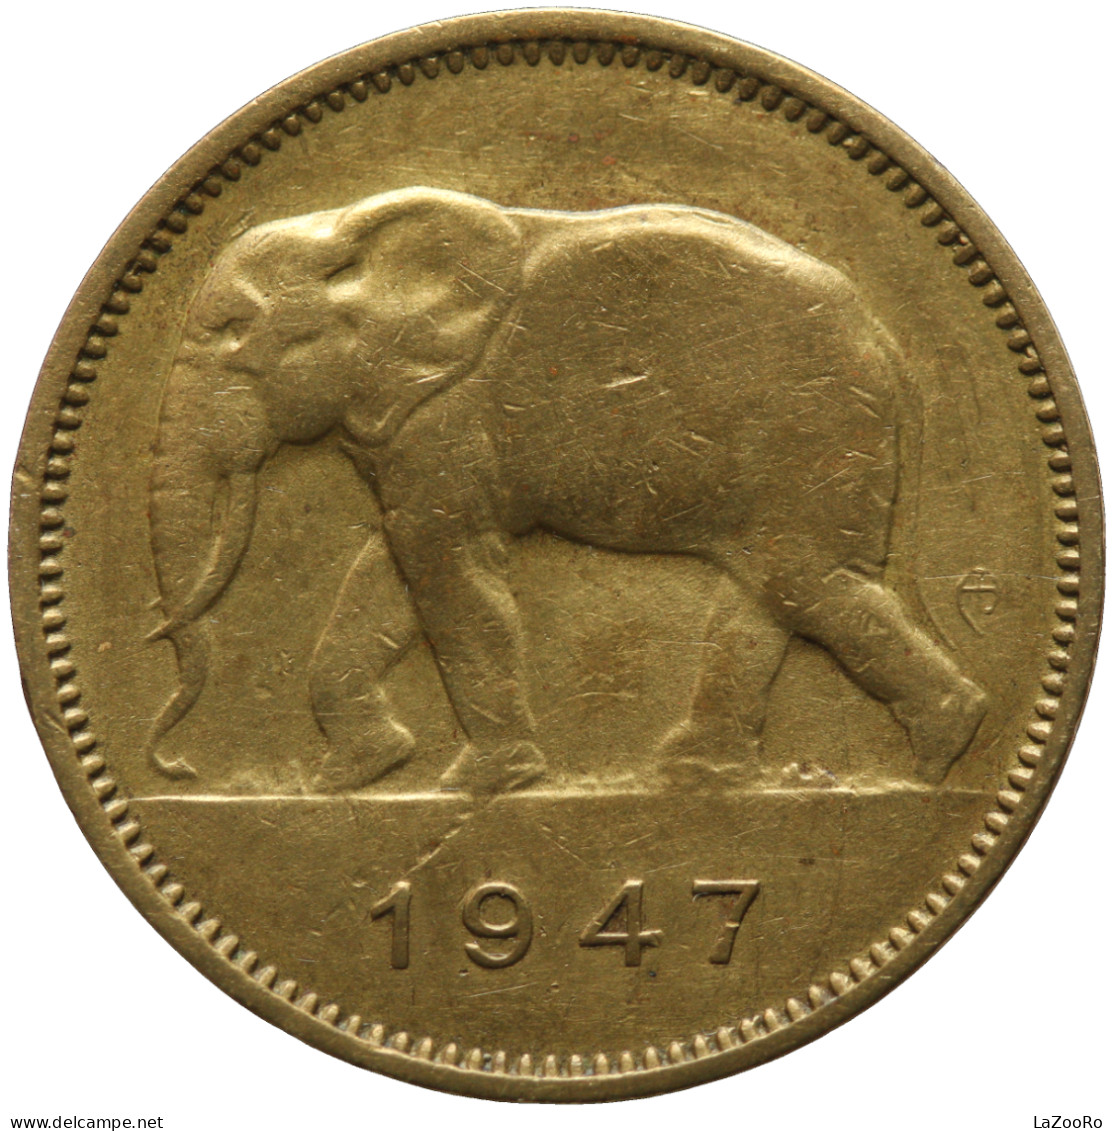 LaZooRo: Belgian Congo 2 Francs 1947 XF - 1945-1951: Regency